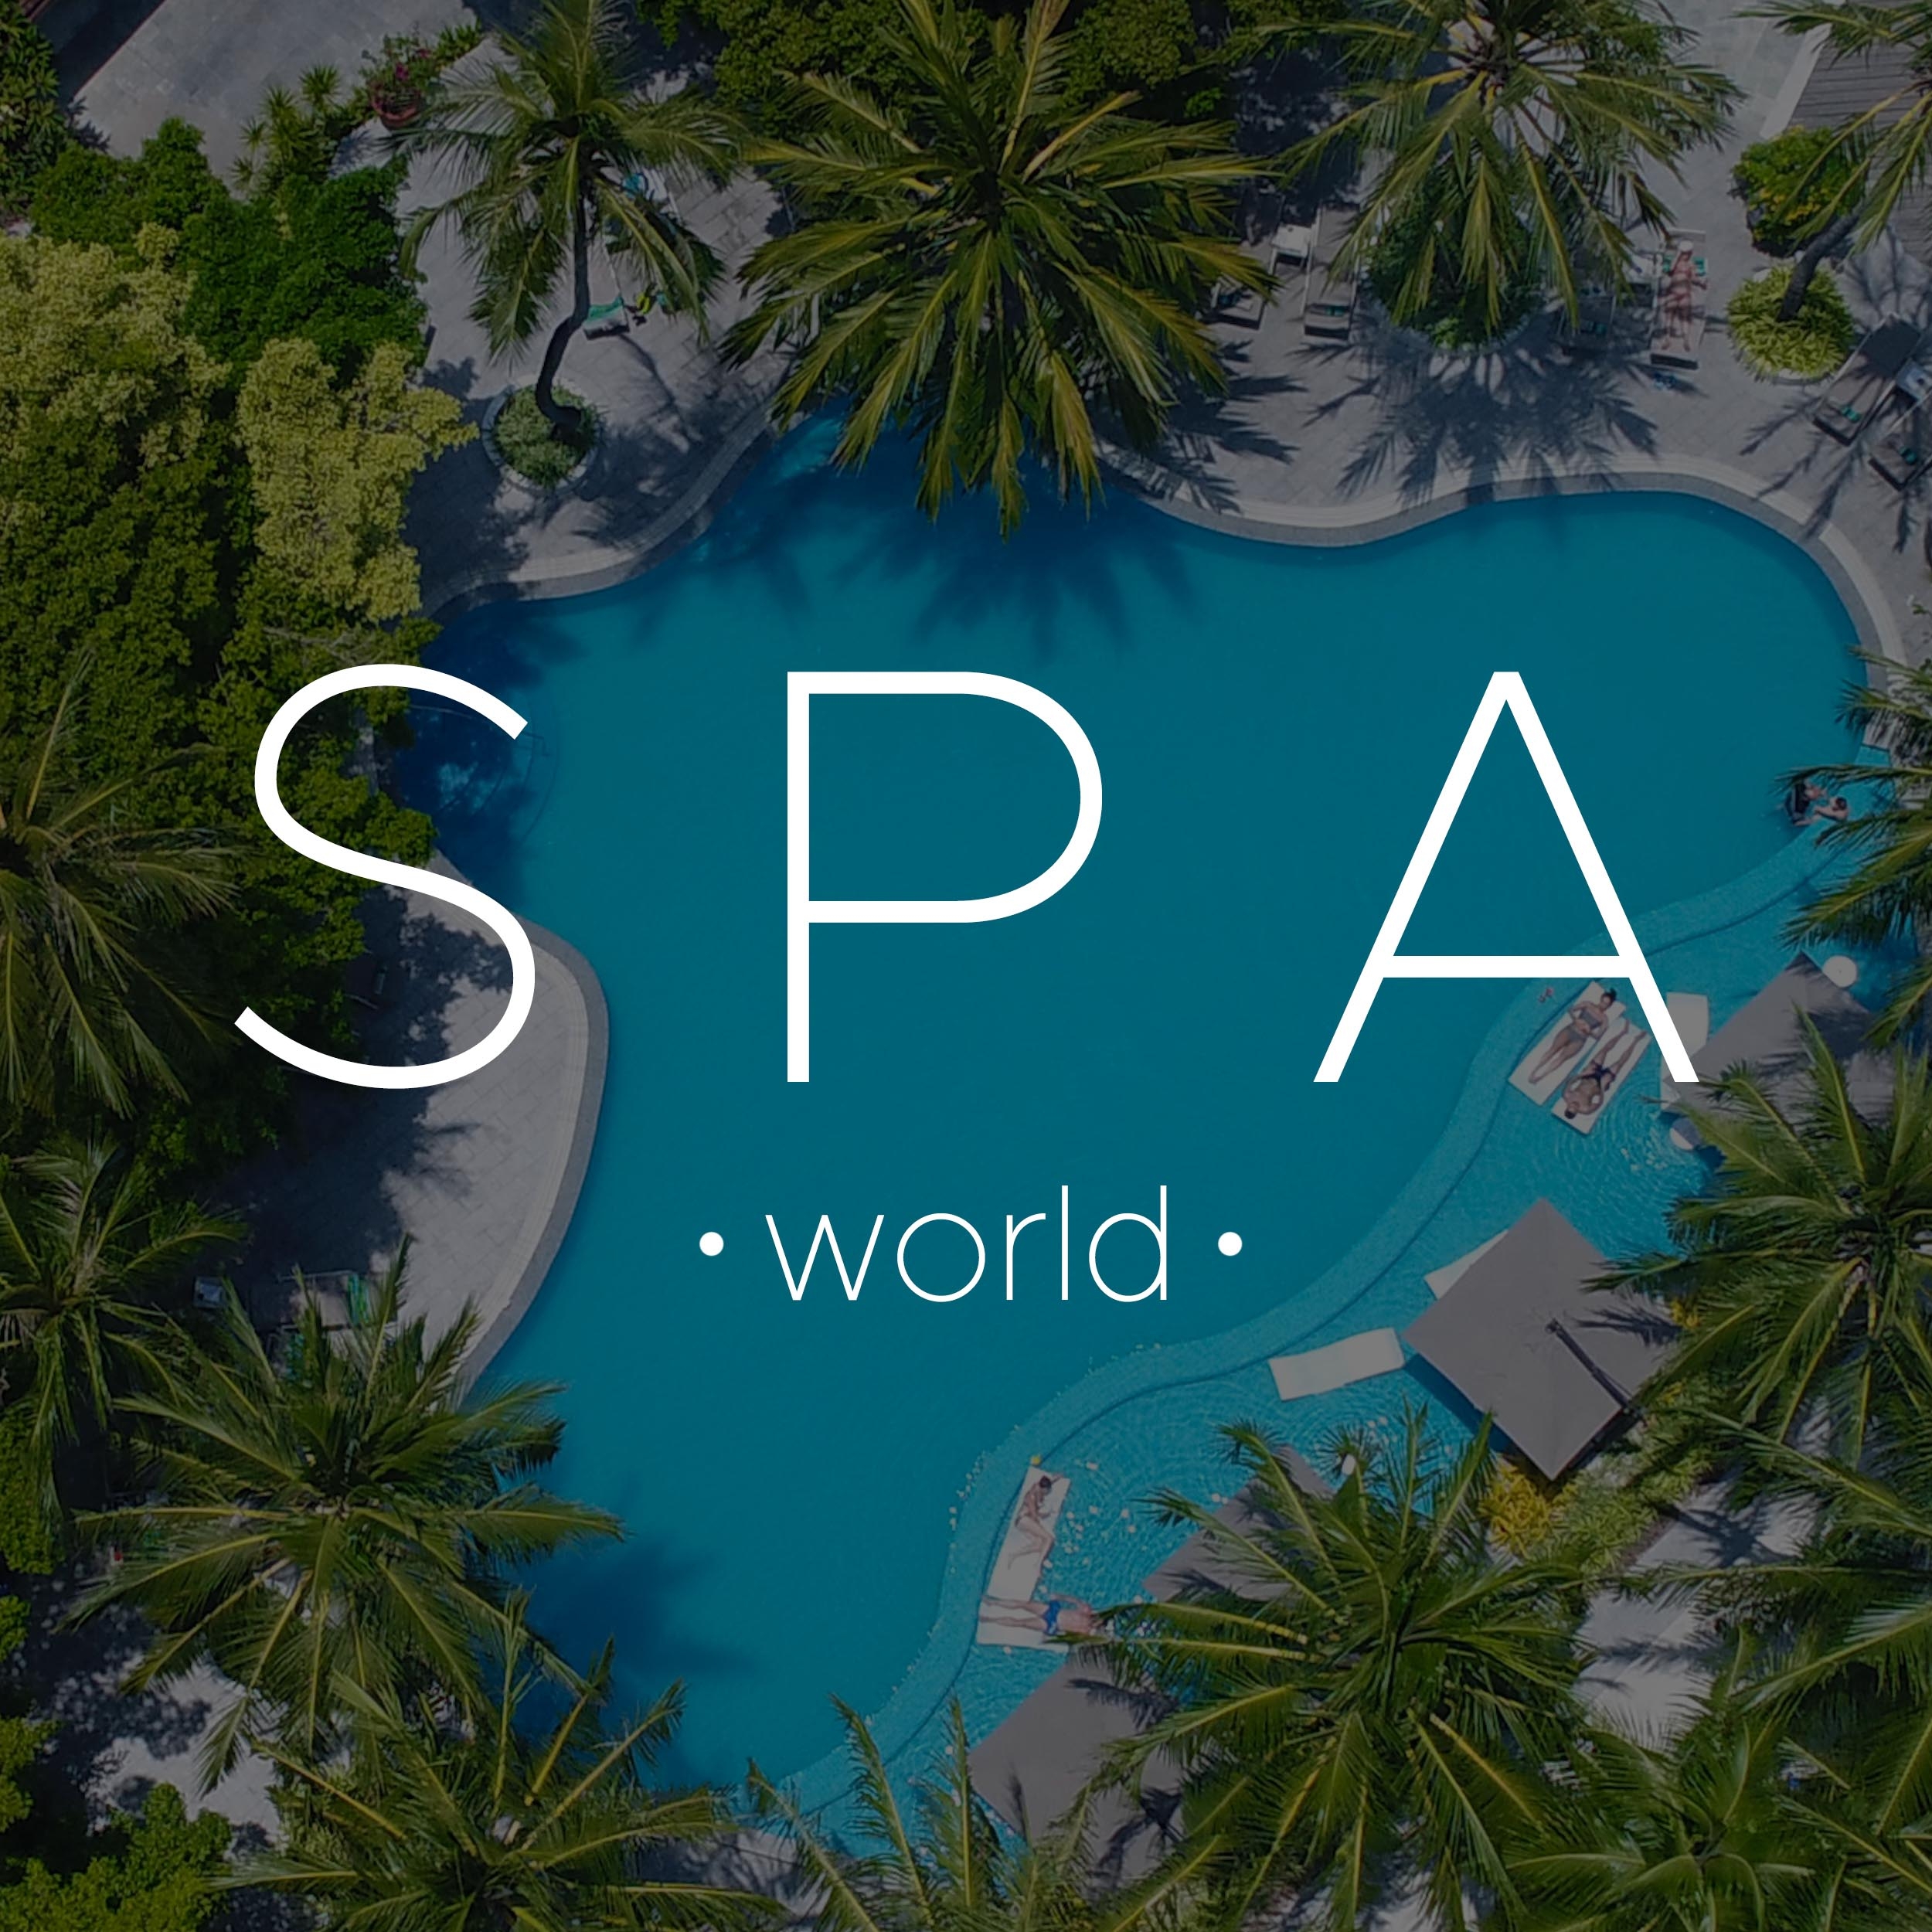 Spa World - Peaceful Music for Massage, Sauna, Relaxation, Breathing Exercises, Yoga and Meditation